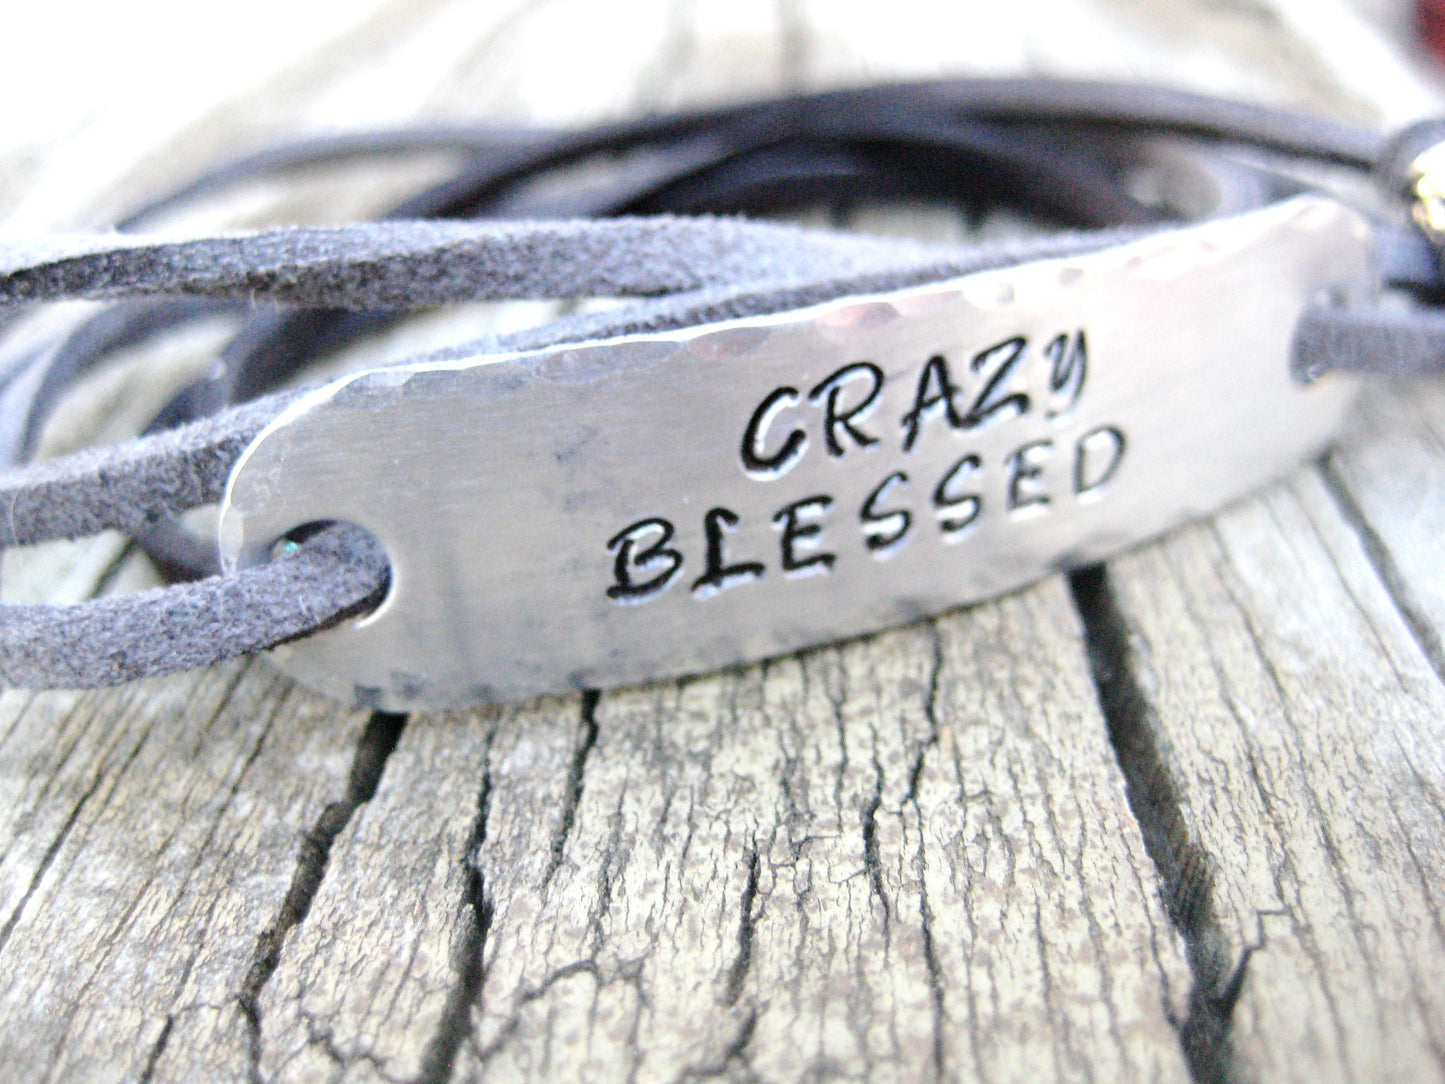 Personalized Bracelet Wrap, Crazy Blessed, Faith Bracelet, Bracelet With Words, Faith Gift, Blessed Bracelet